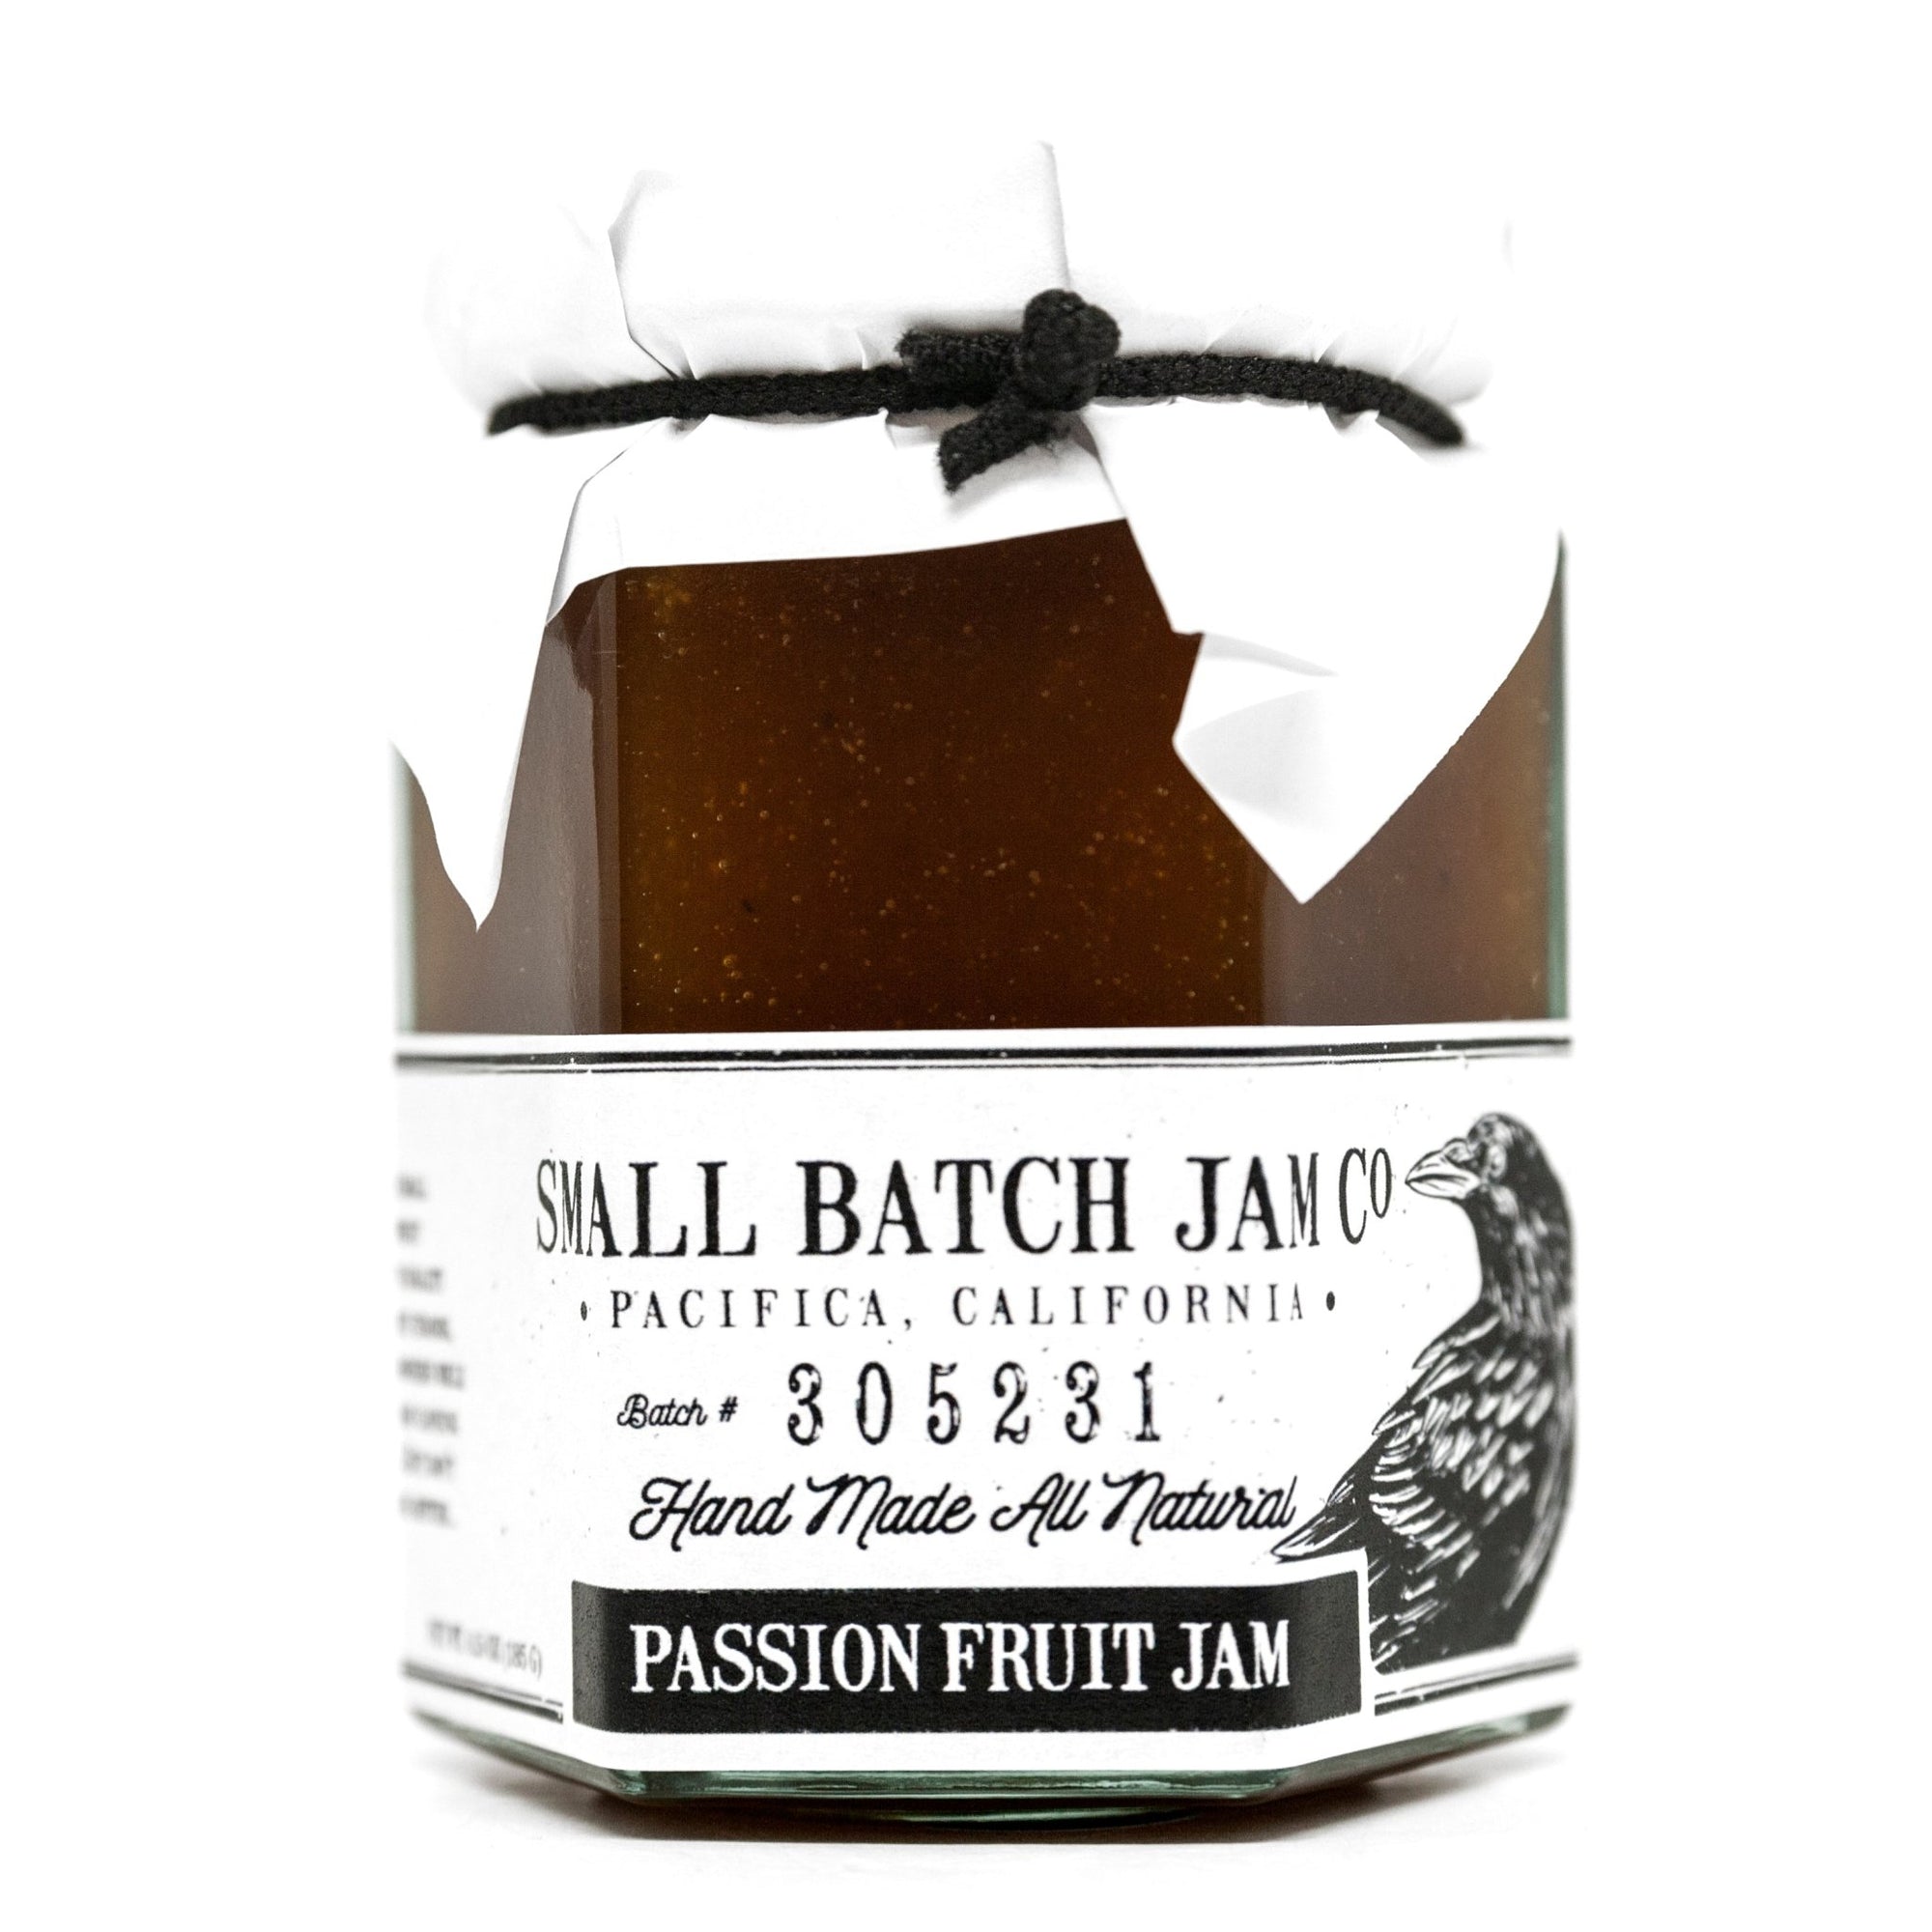 Passion Fruit Jam - Small Batch Jam Co